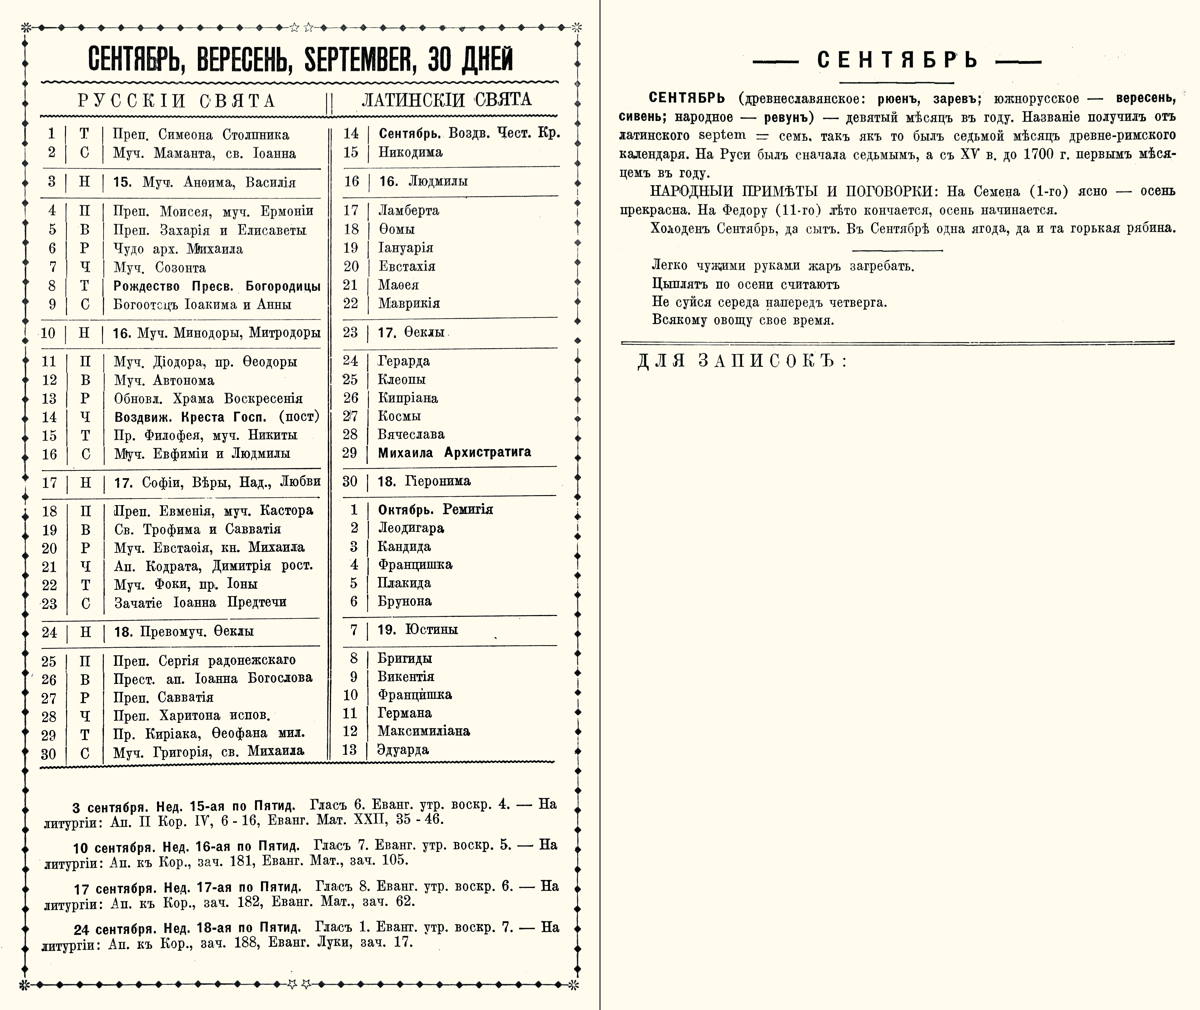 Orthodox Church Calendar, September 1928